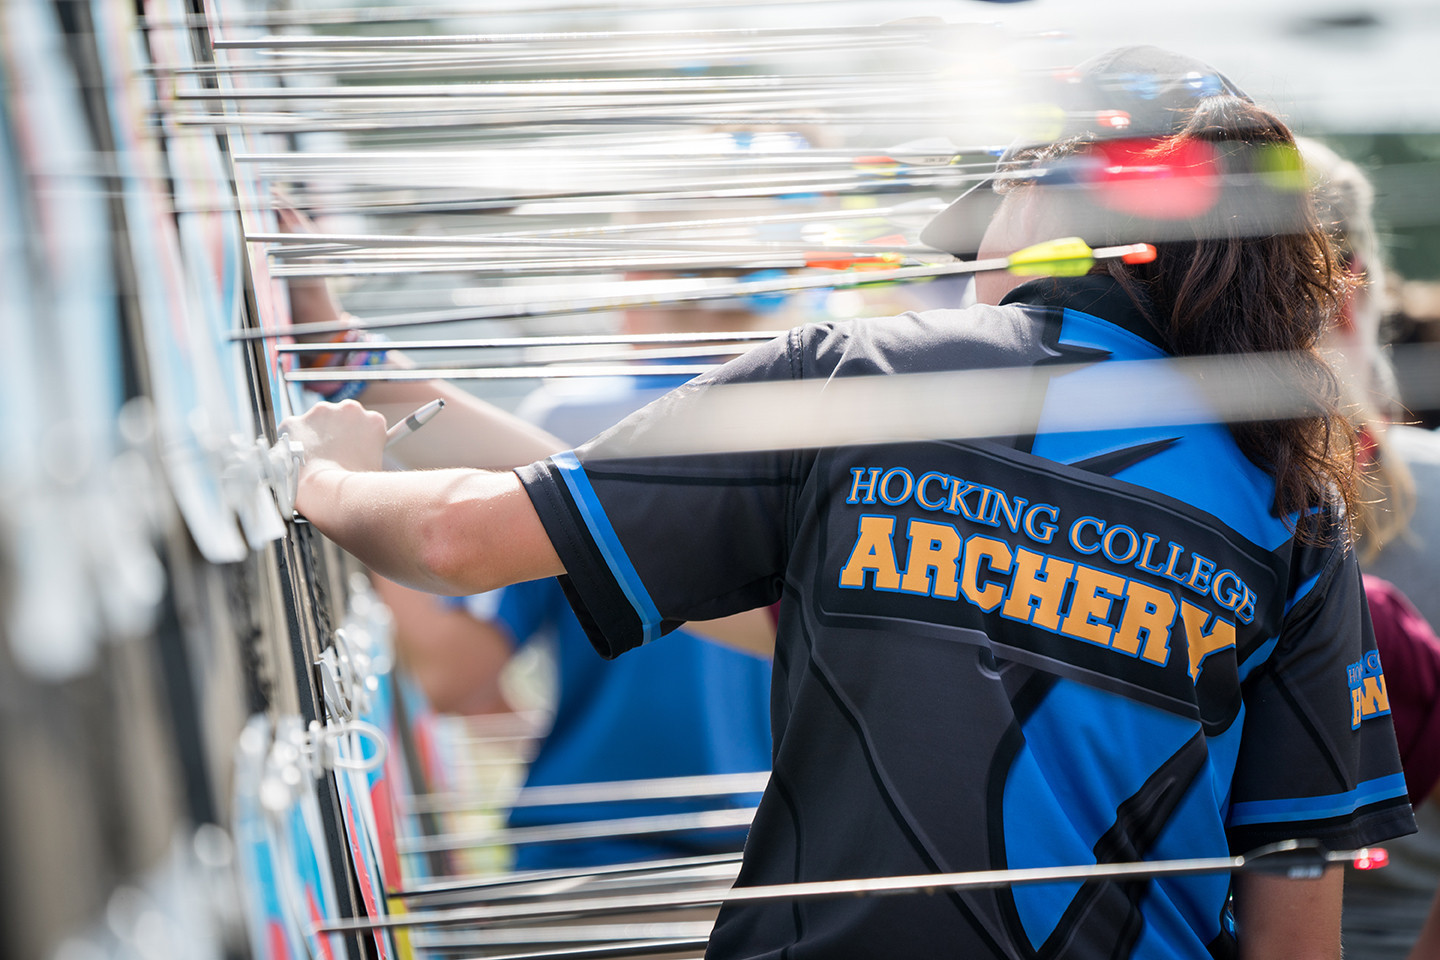 The scheme provides cash to college archery programmes and archery clubs  ©USA Archery